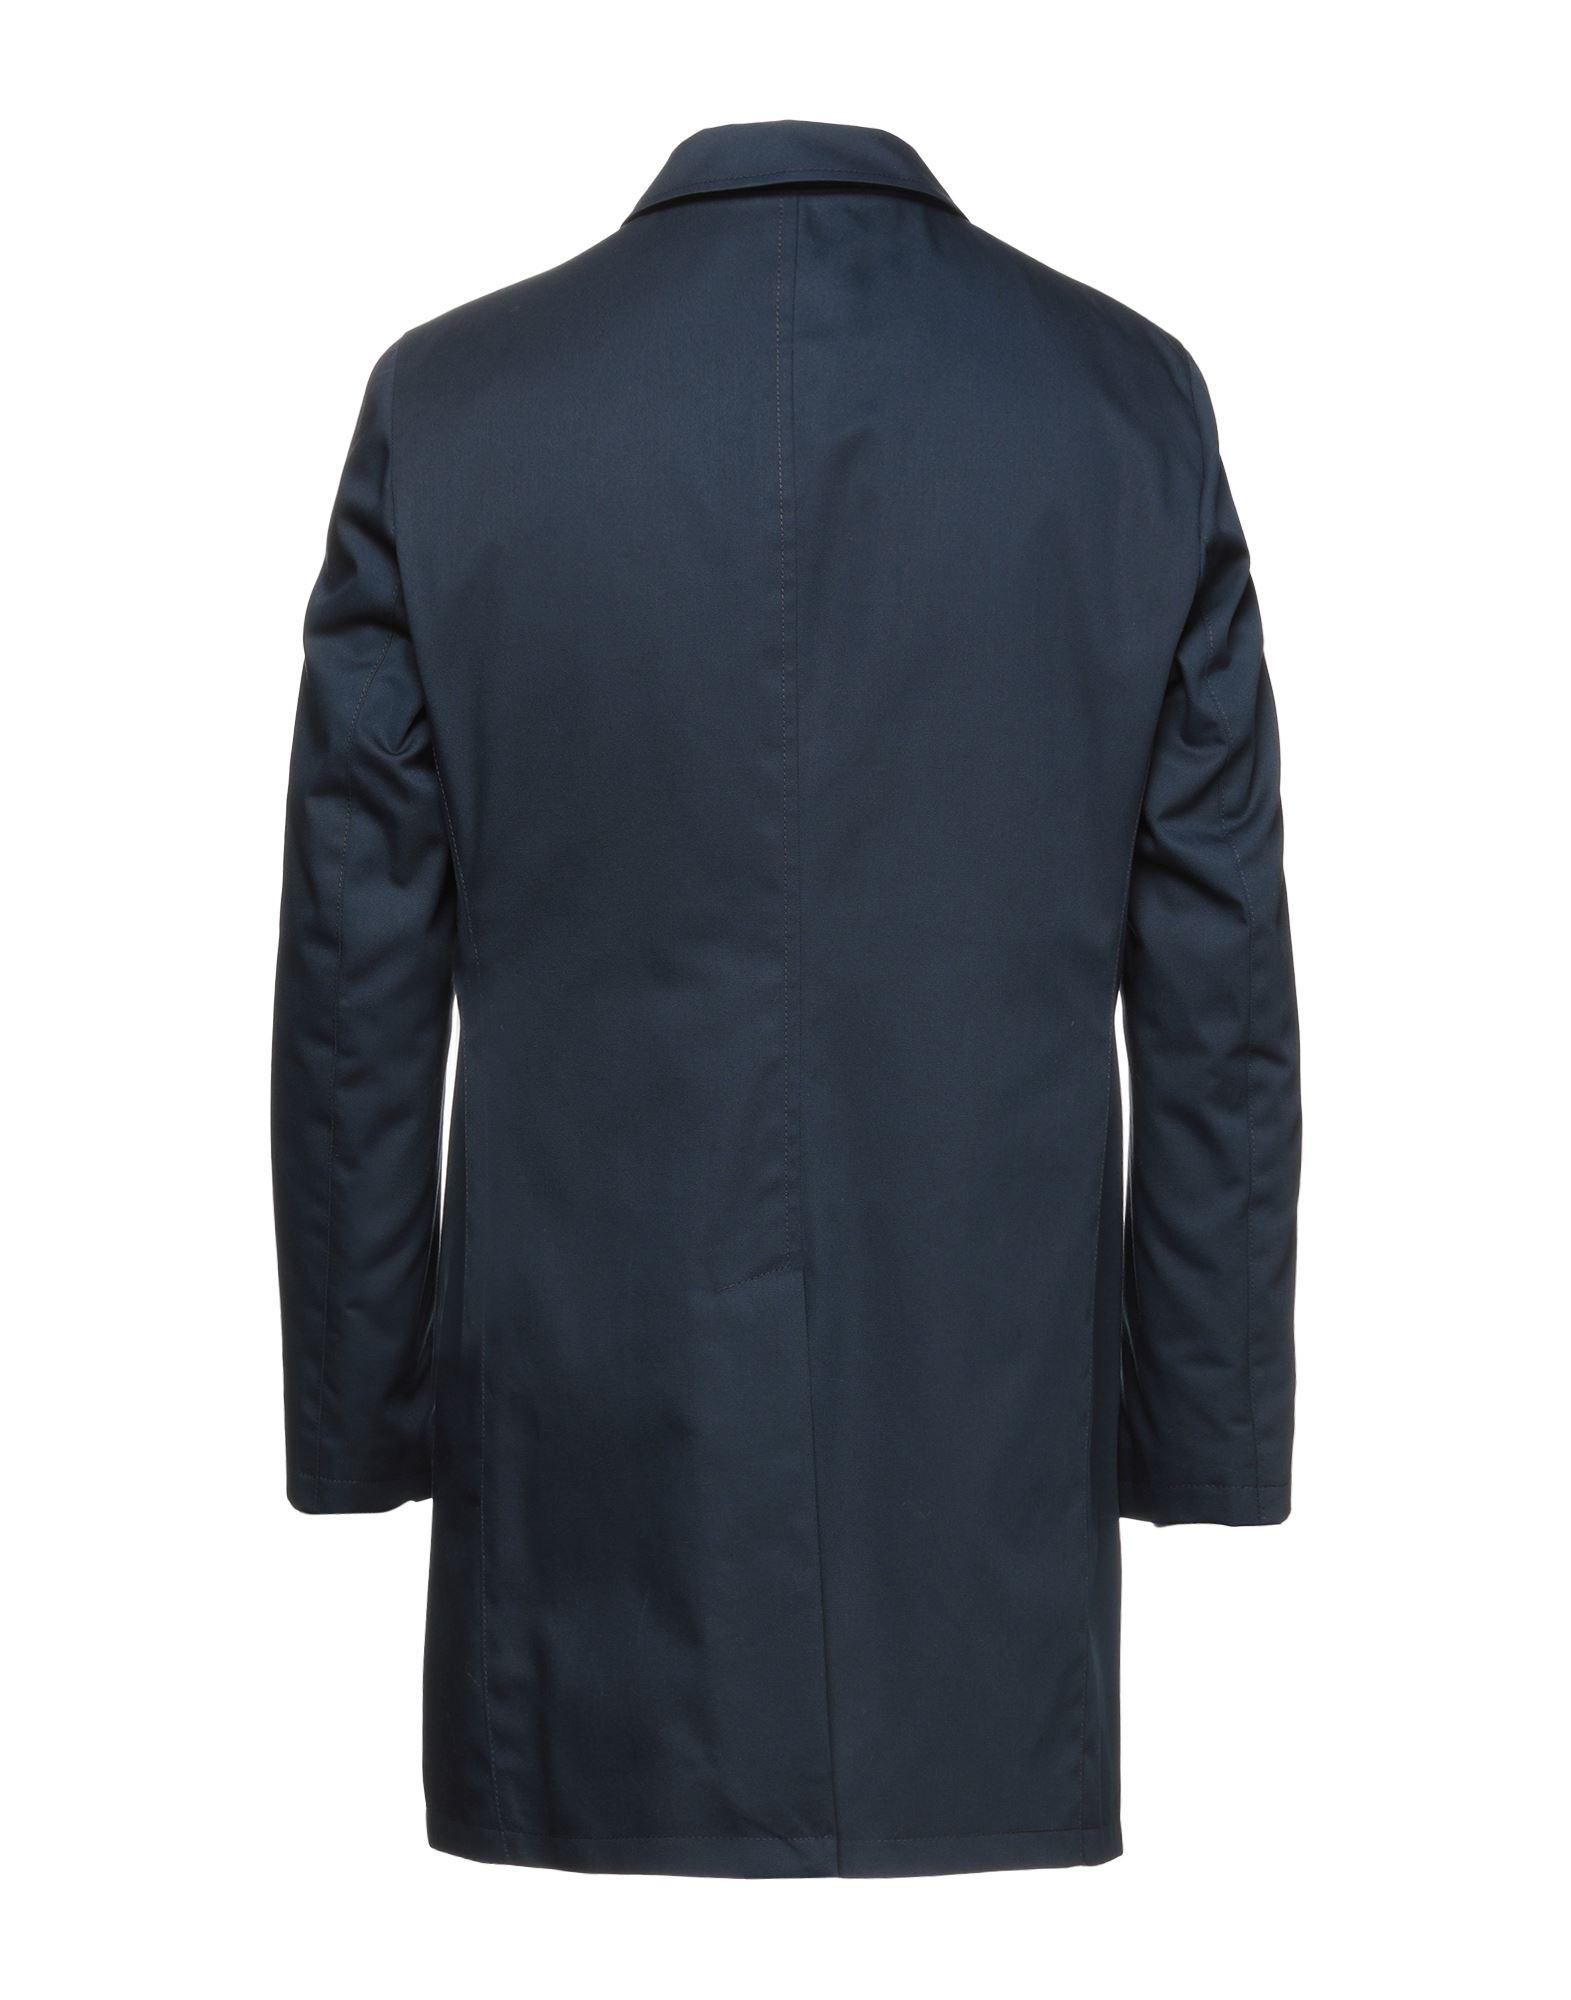 Hevò Flannel Overcoat in Dark Blue (Blue) for Men - Lyst